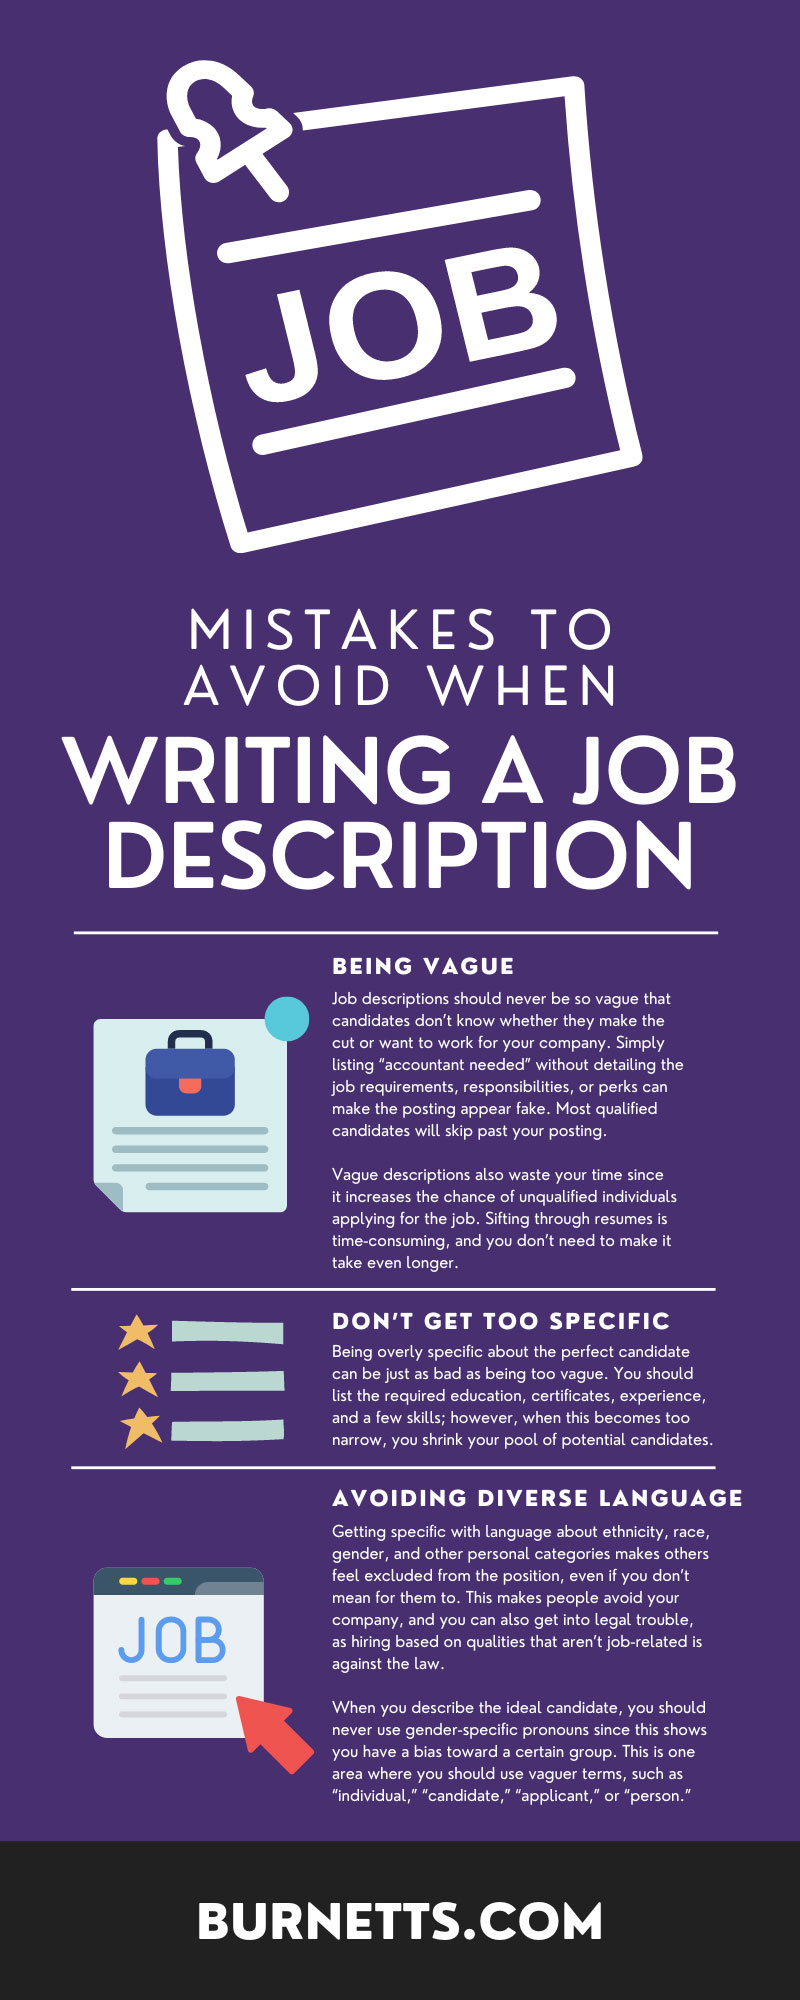 7 Mistakes To Avoid When Writing a Job Description